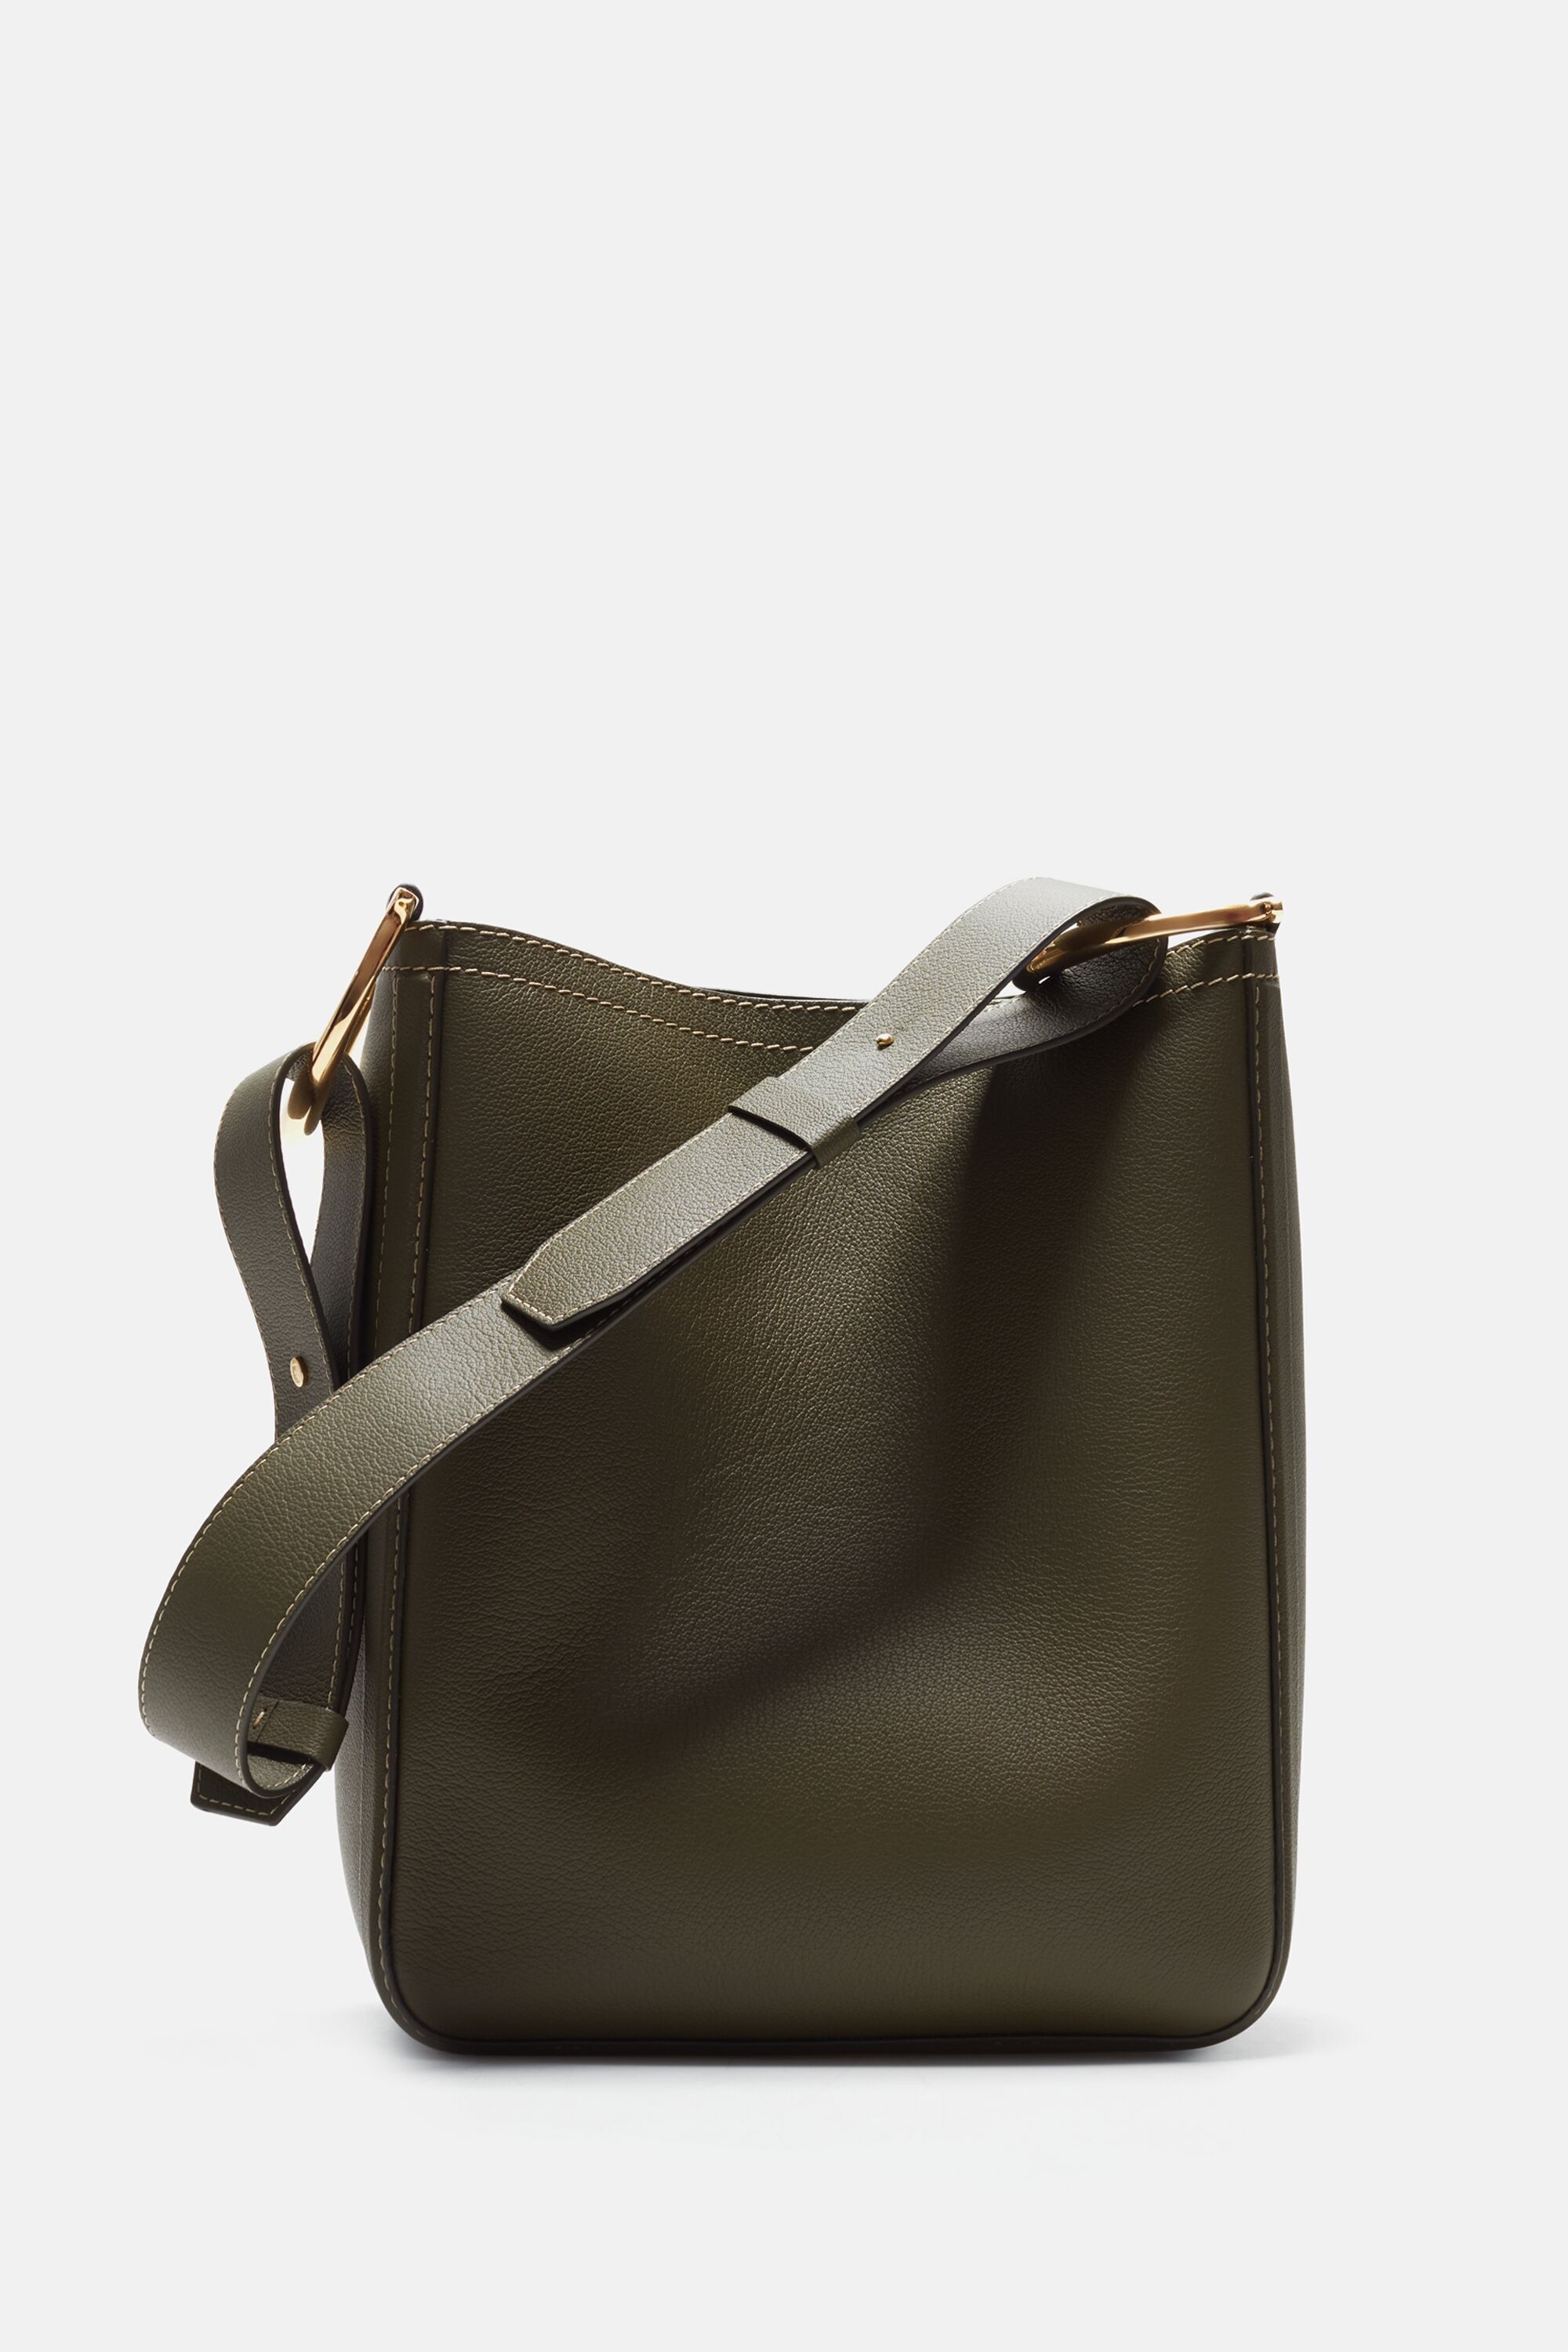 Charro Insignia Hobo | Large shoulder bag